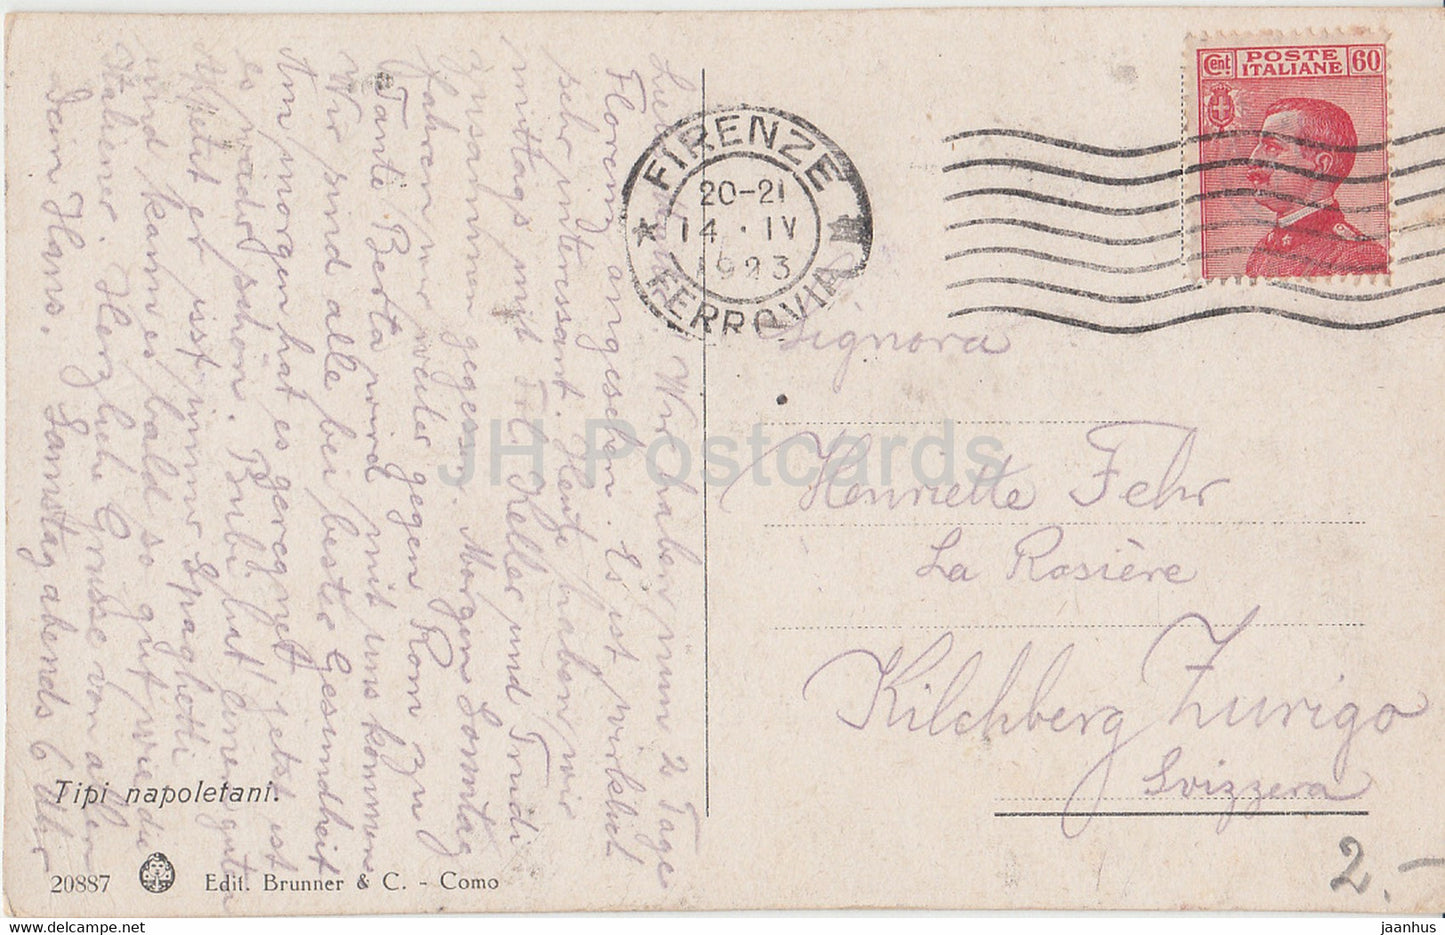 Tipi Napoletani – Pasta – Spaghetti – Jungen – Kinder – Brunner &amp; C – 20887 – alte Postkarte – 1923 – Italien – gebraucht